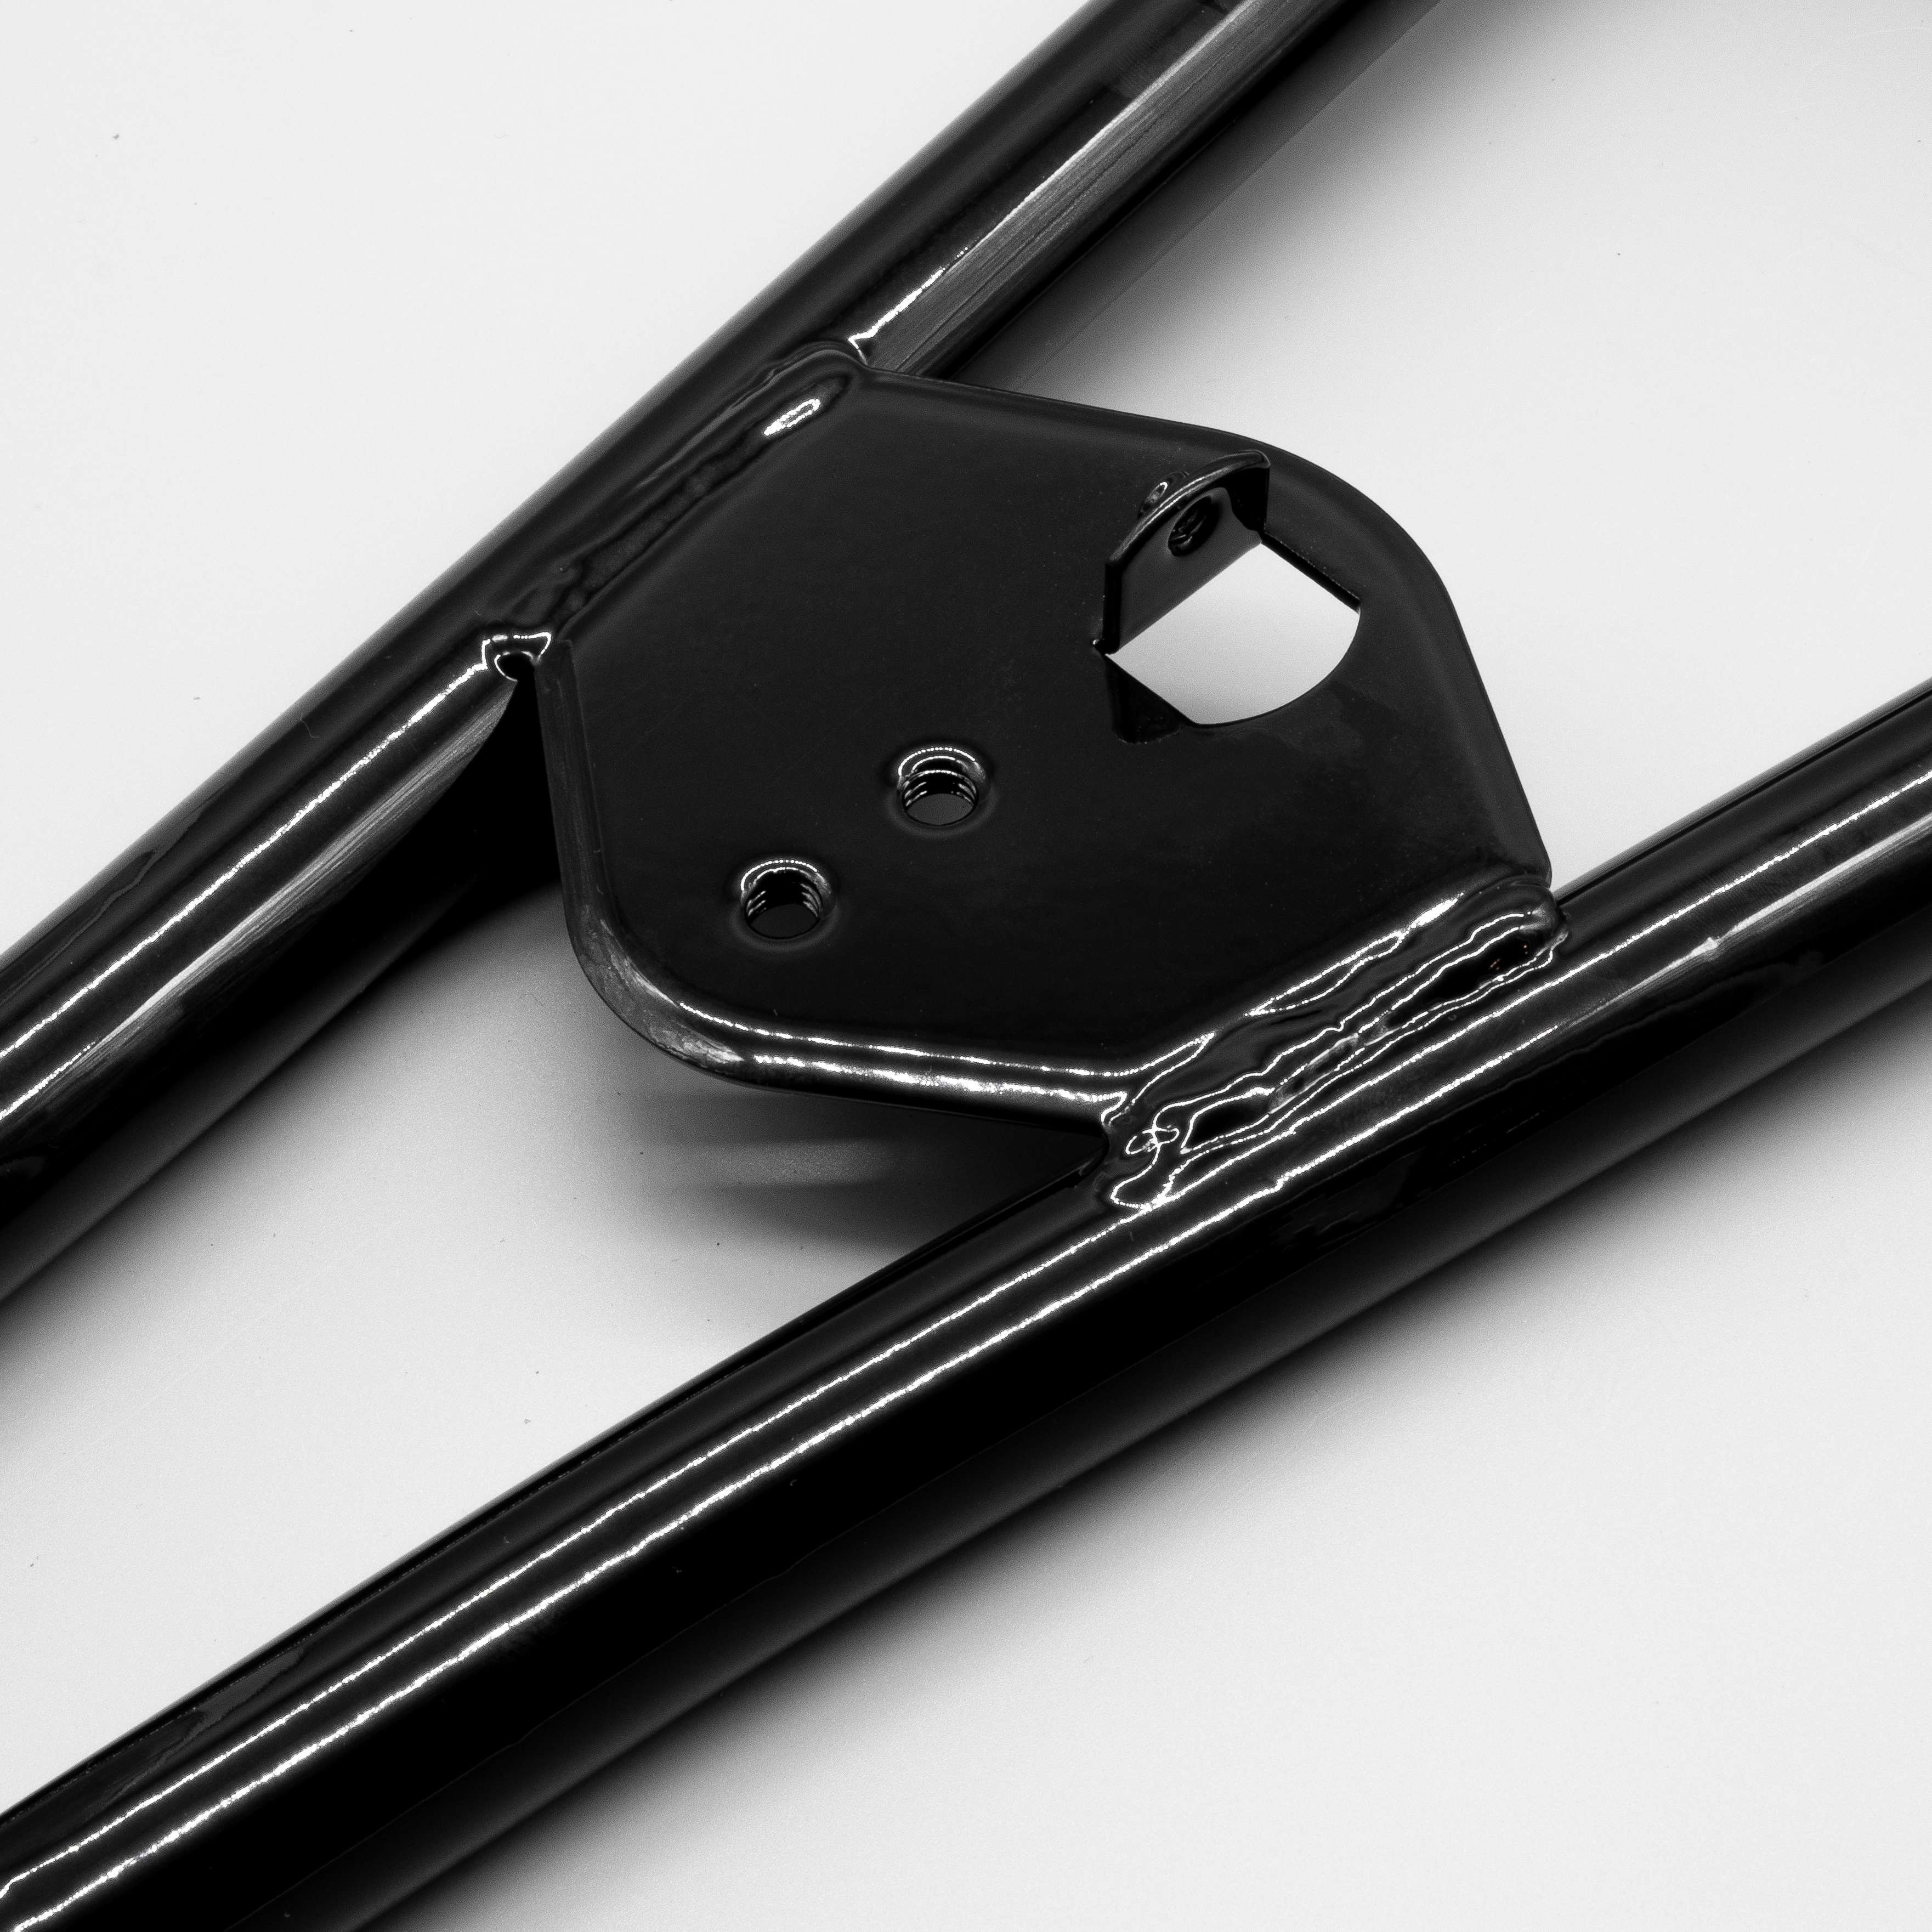 Rahmenobergurt Obergurt verstärkt schwarz S50 S51 S70